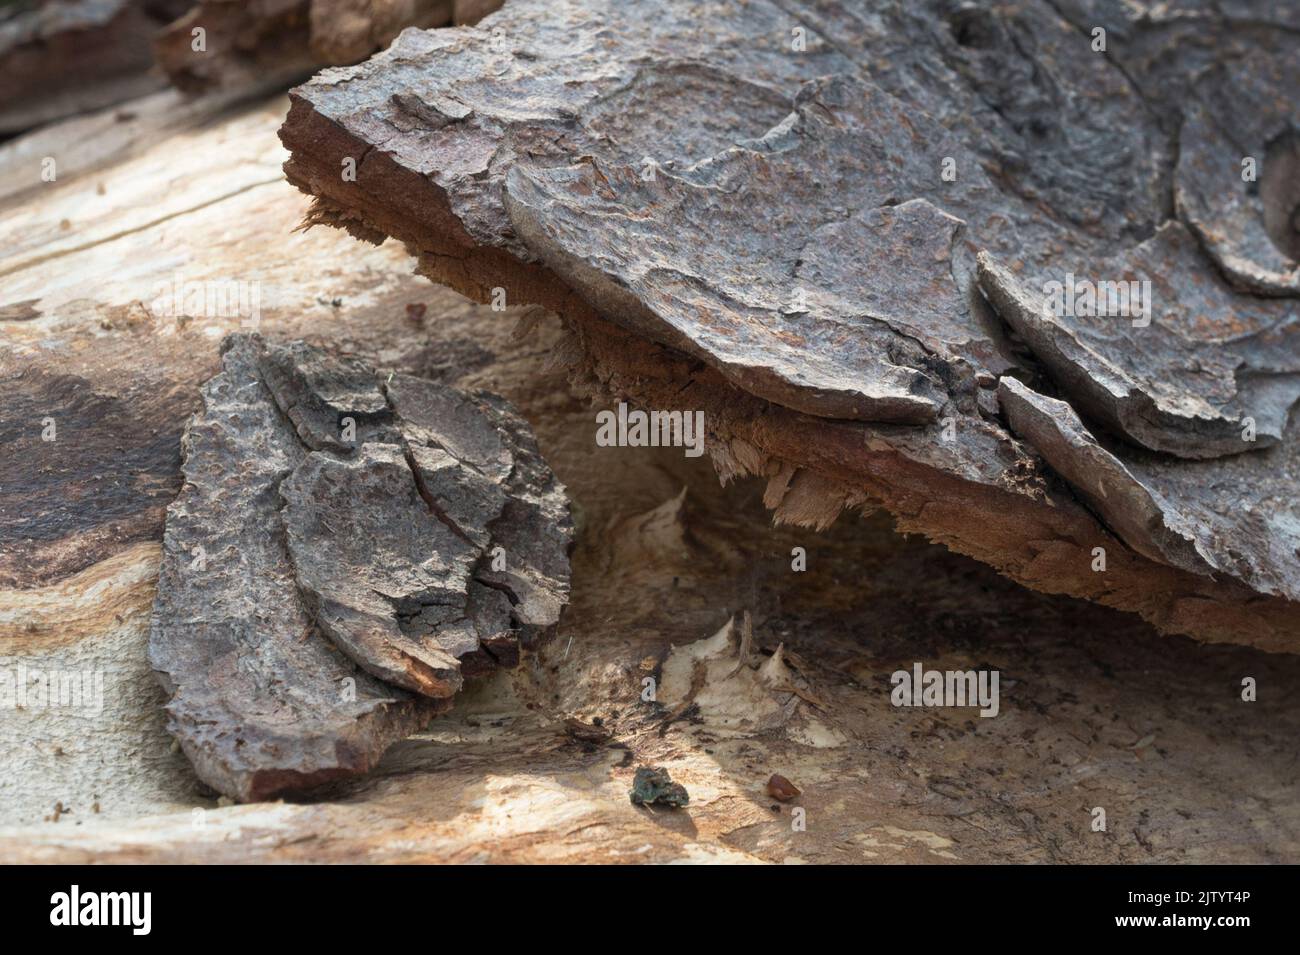 Squirrel damage and Peeling bark on tree Stock Photo